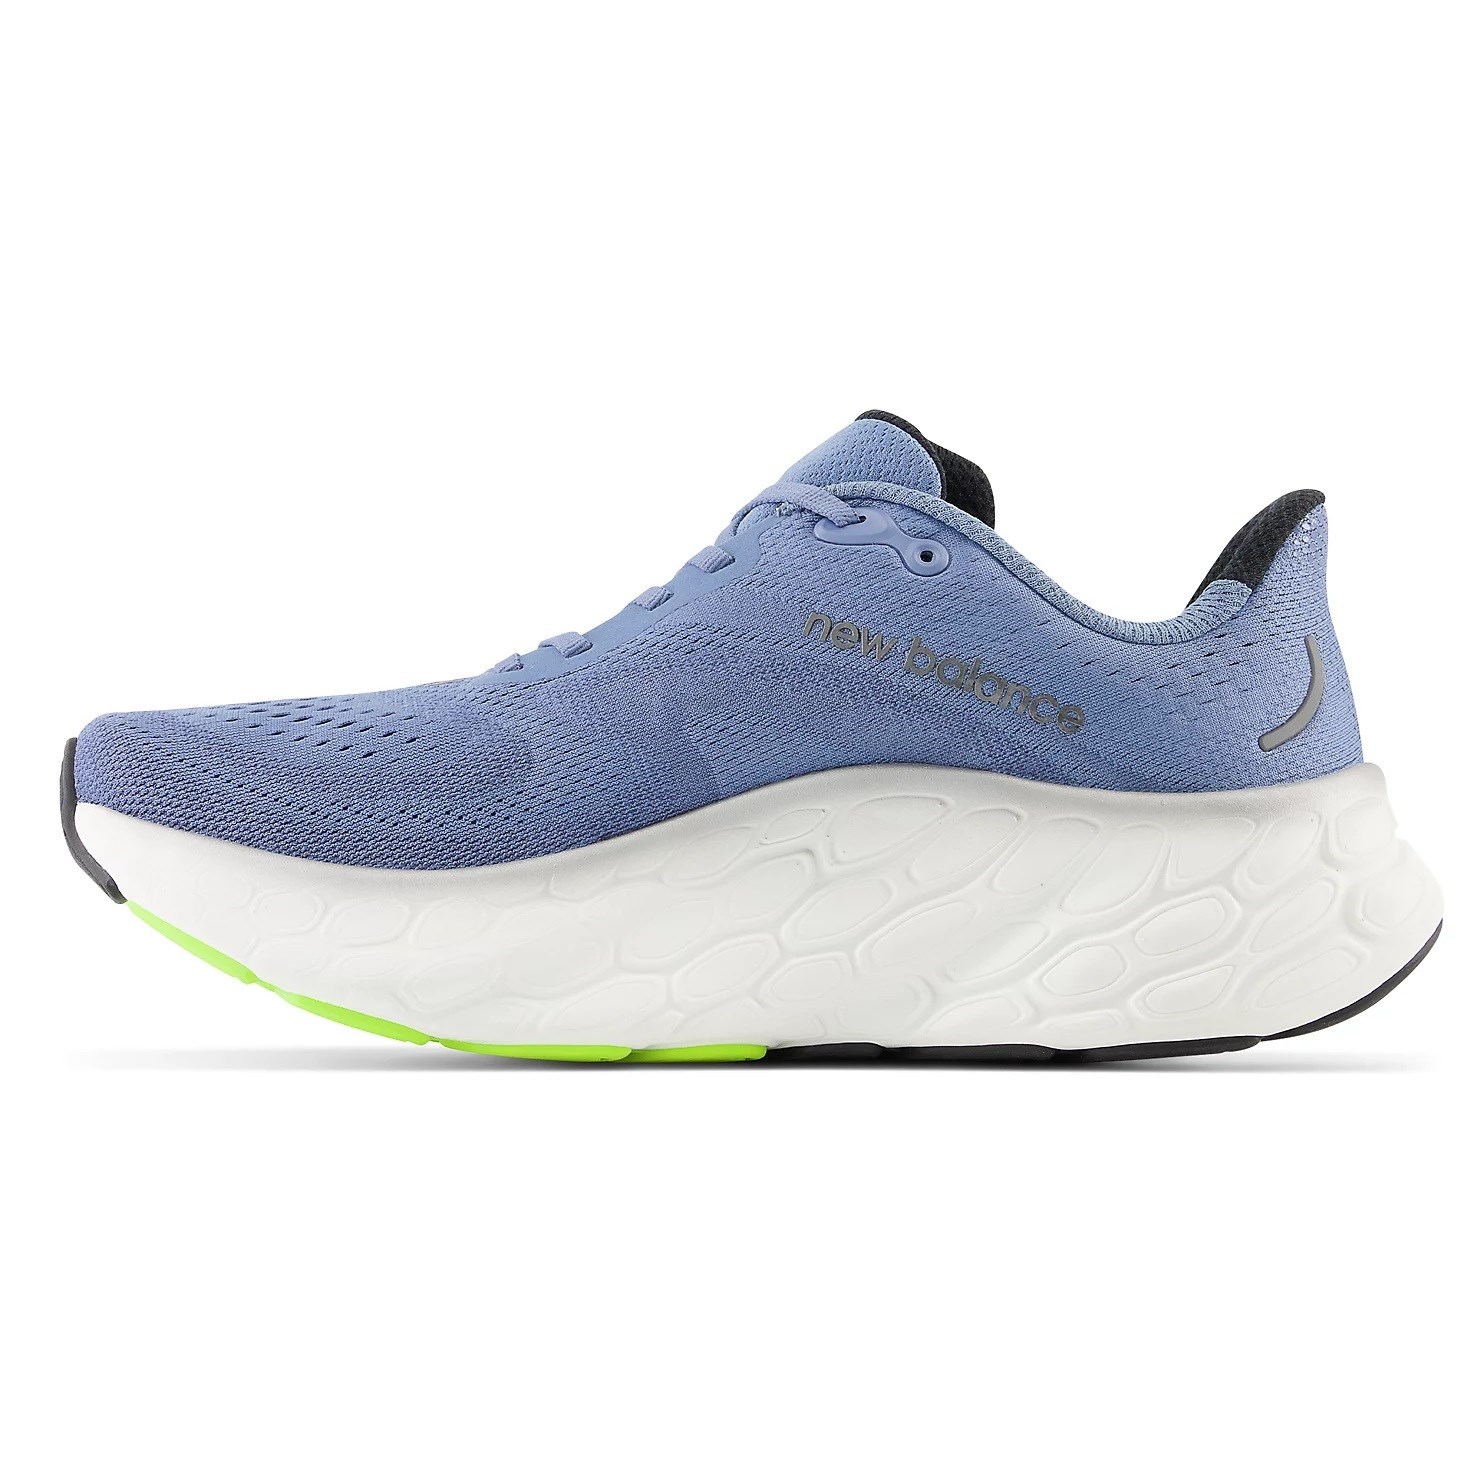 New Balance Fresh Foam More v4 - Mens Running Shoes - Mercury Blue/Dark ...